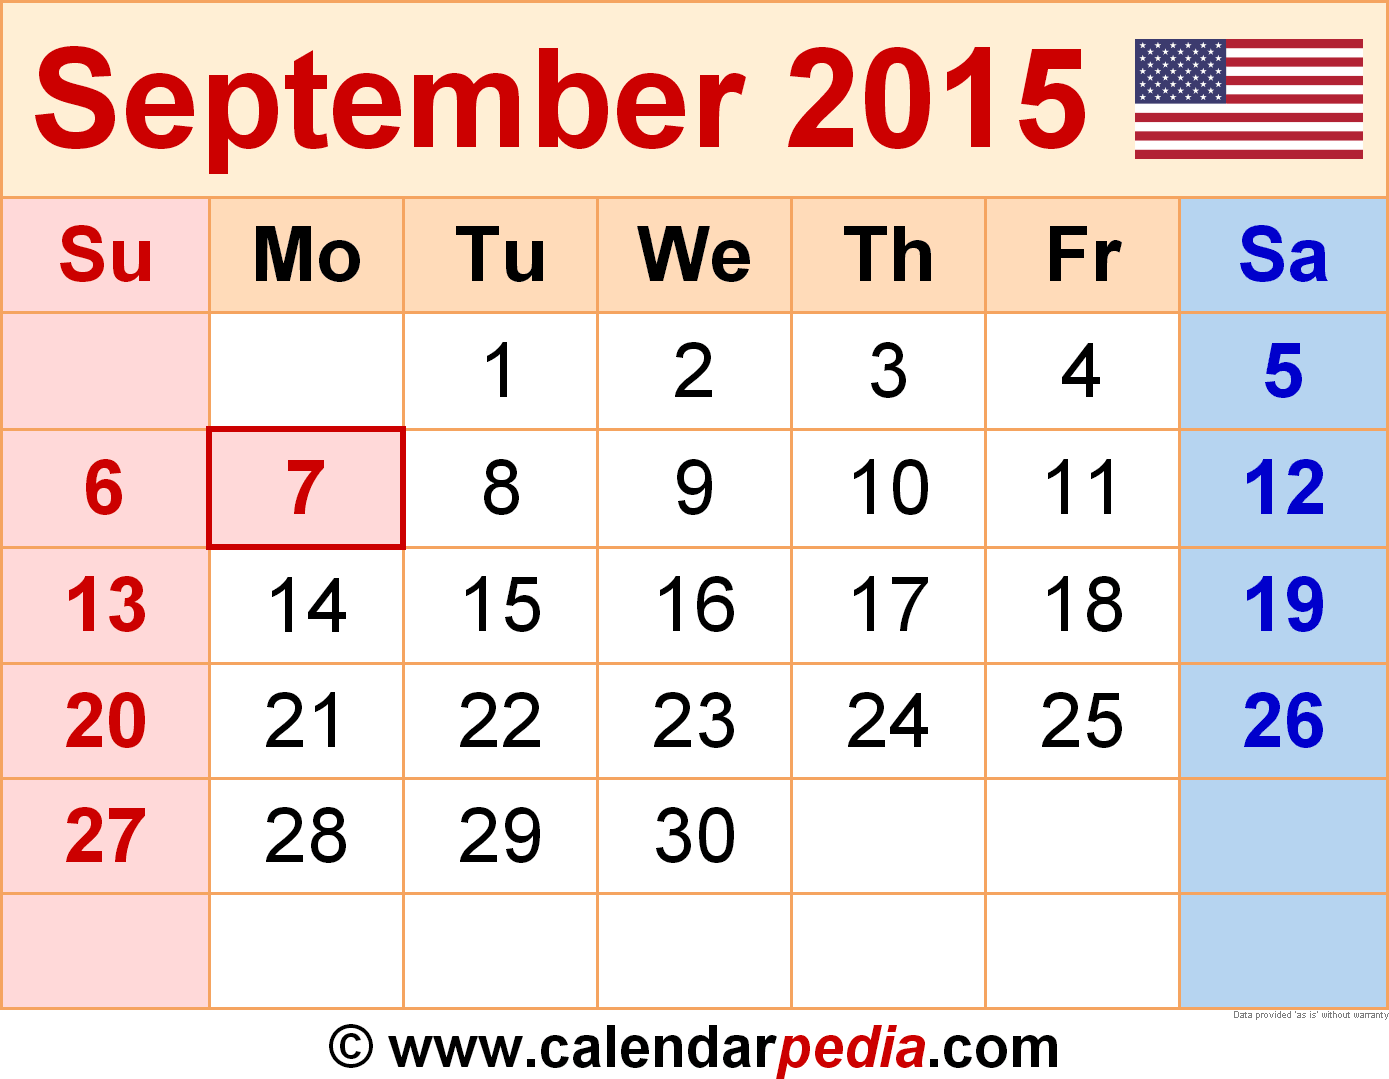 September 2015 Calendar Septe